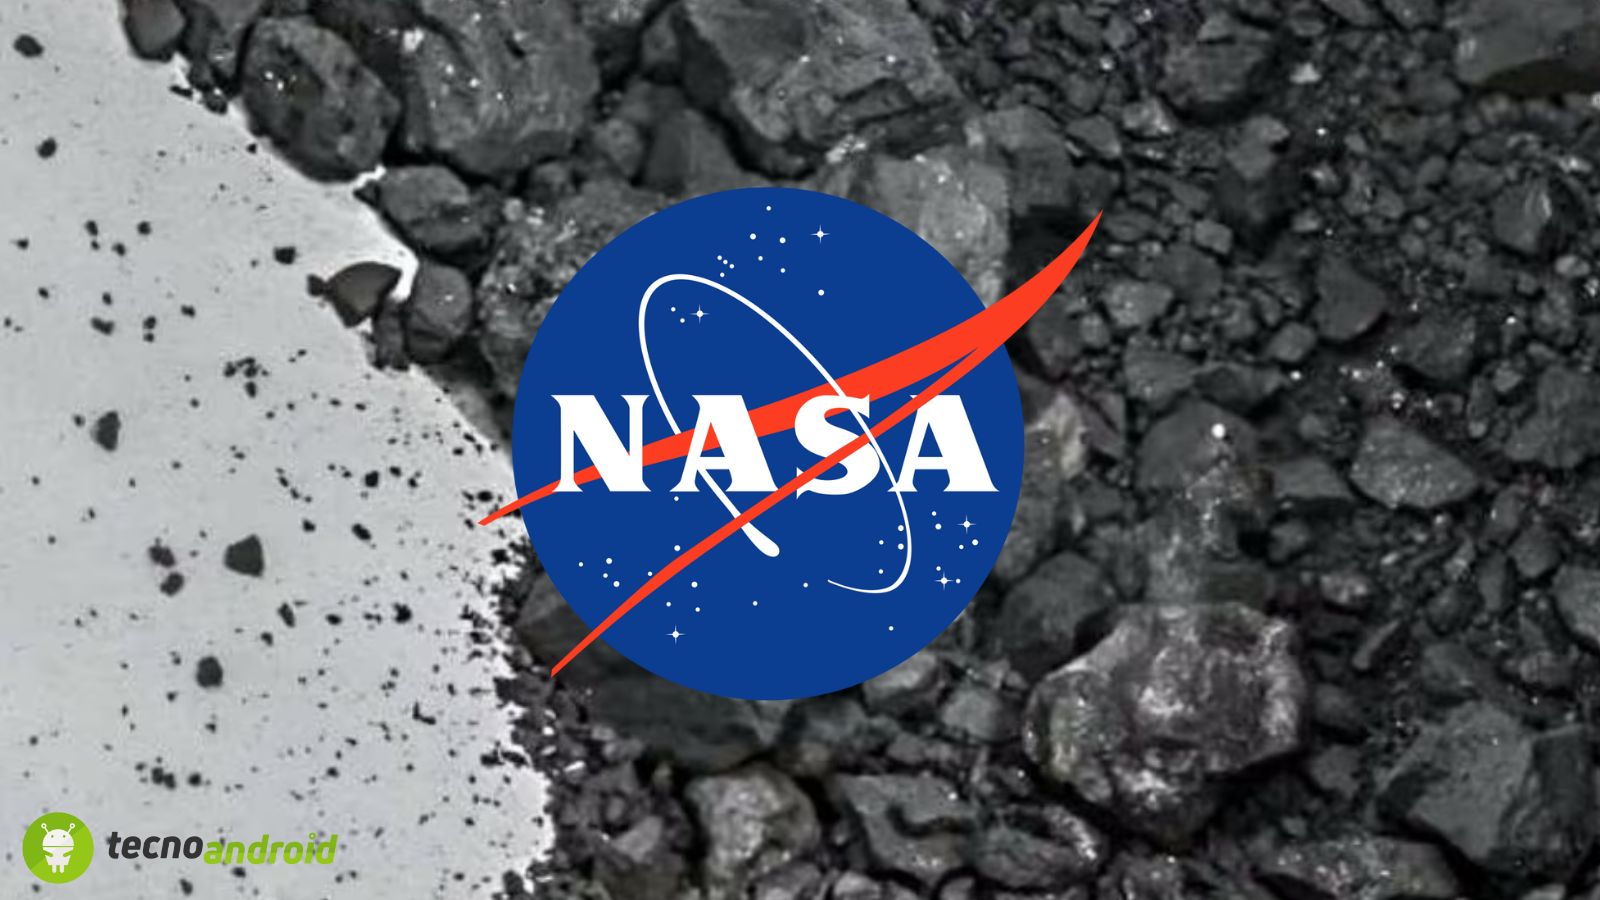 NASA asteroide bennu